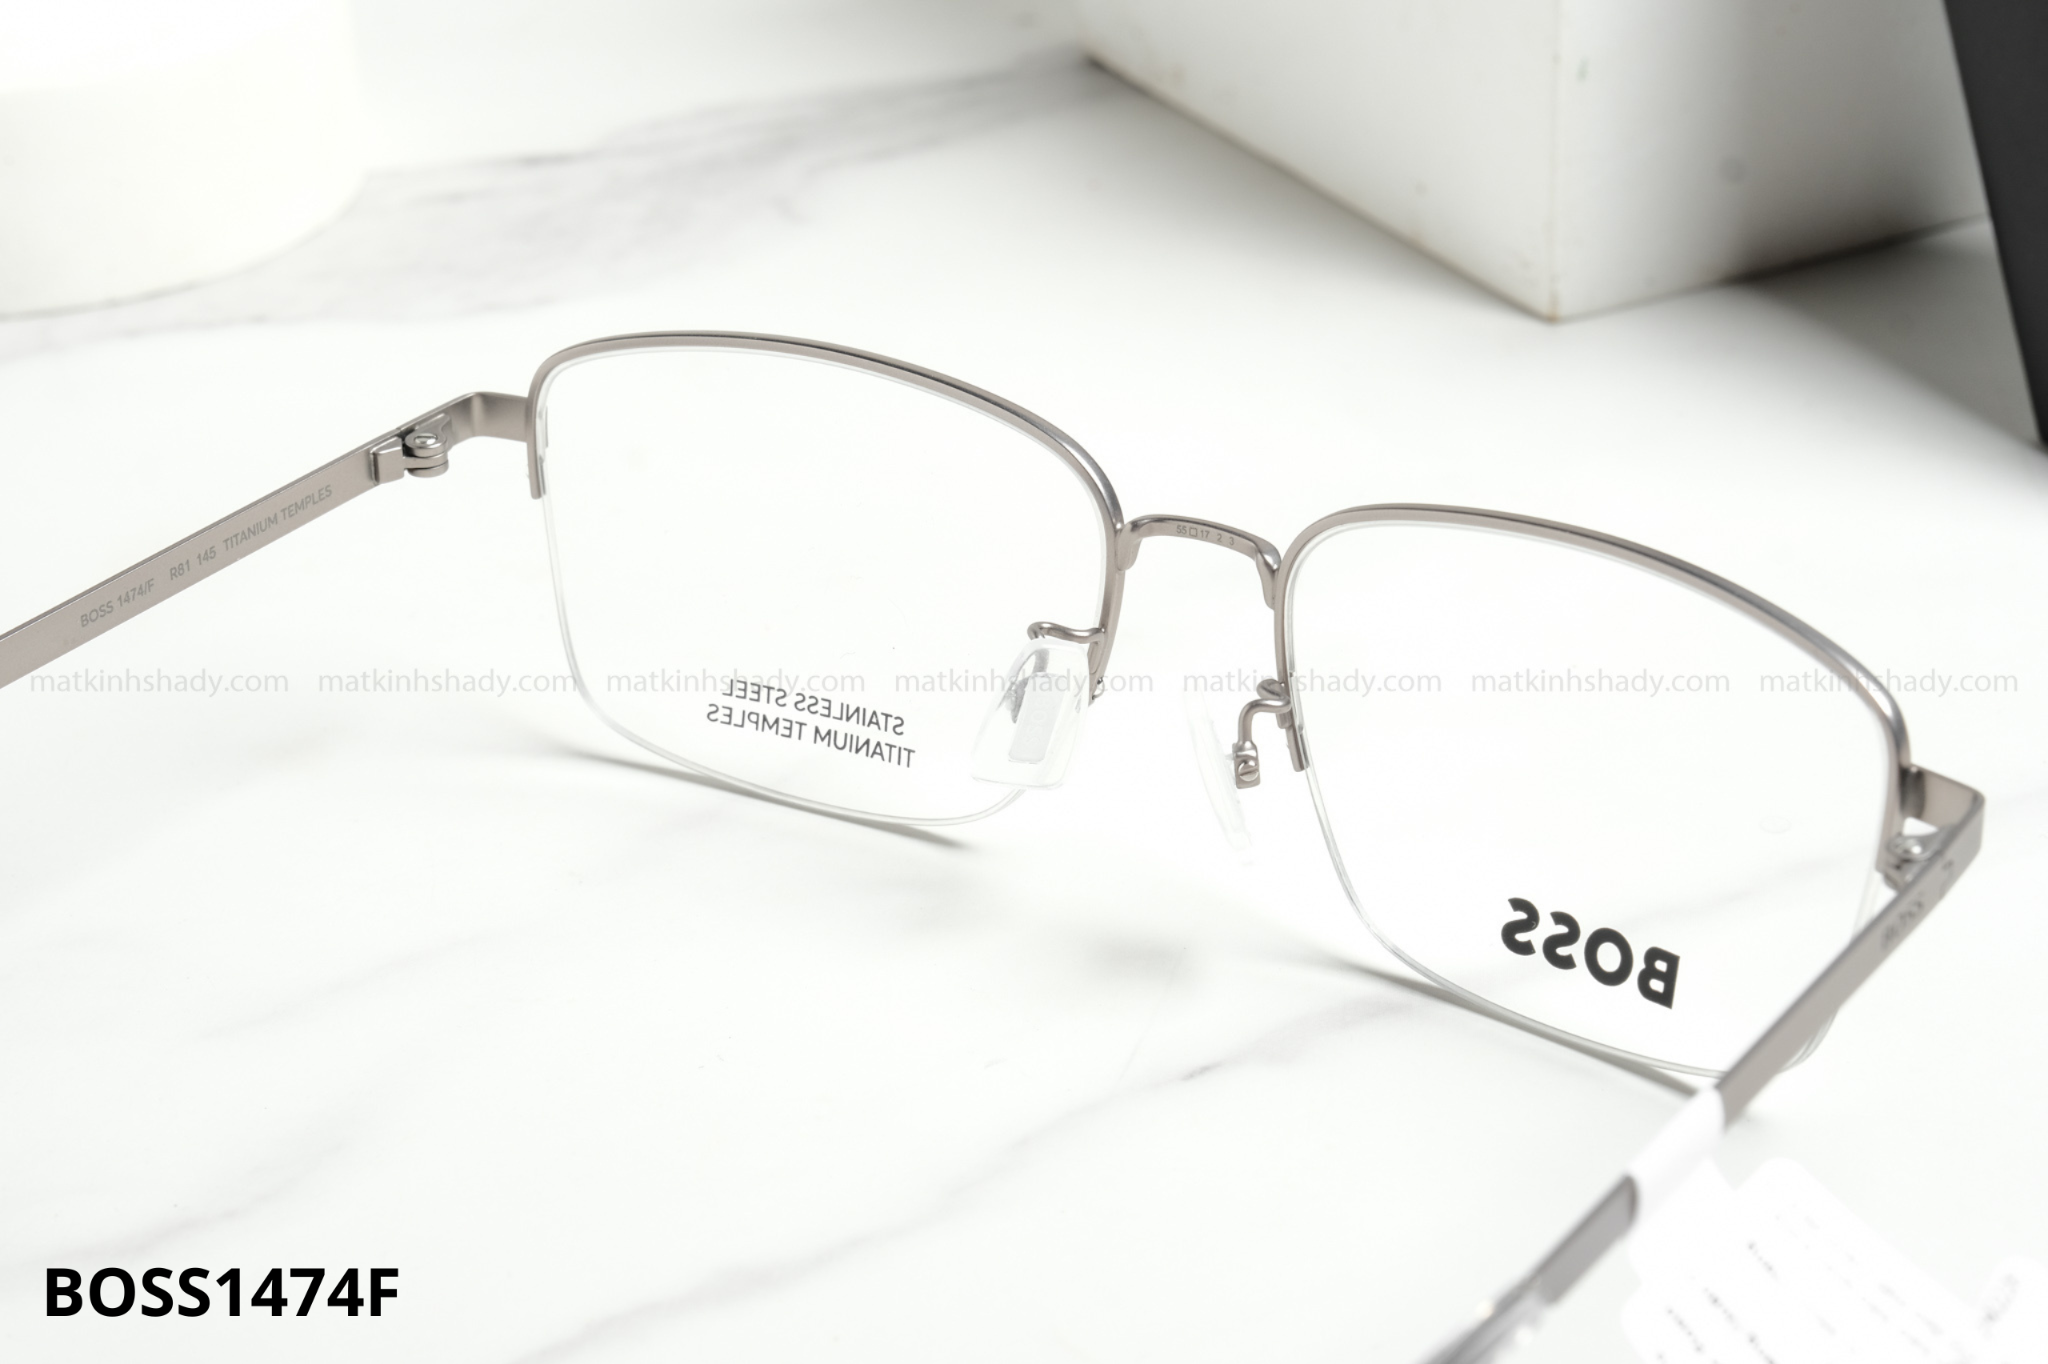  Boss Eyewear - Glasses - Boss1474F 